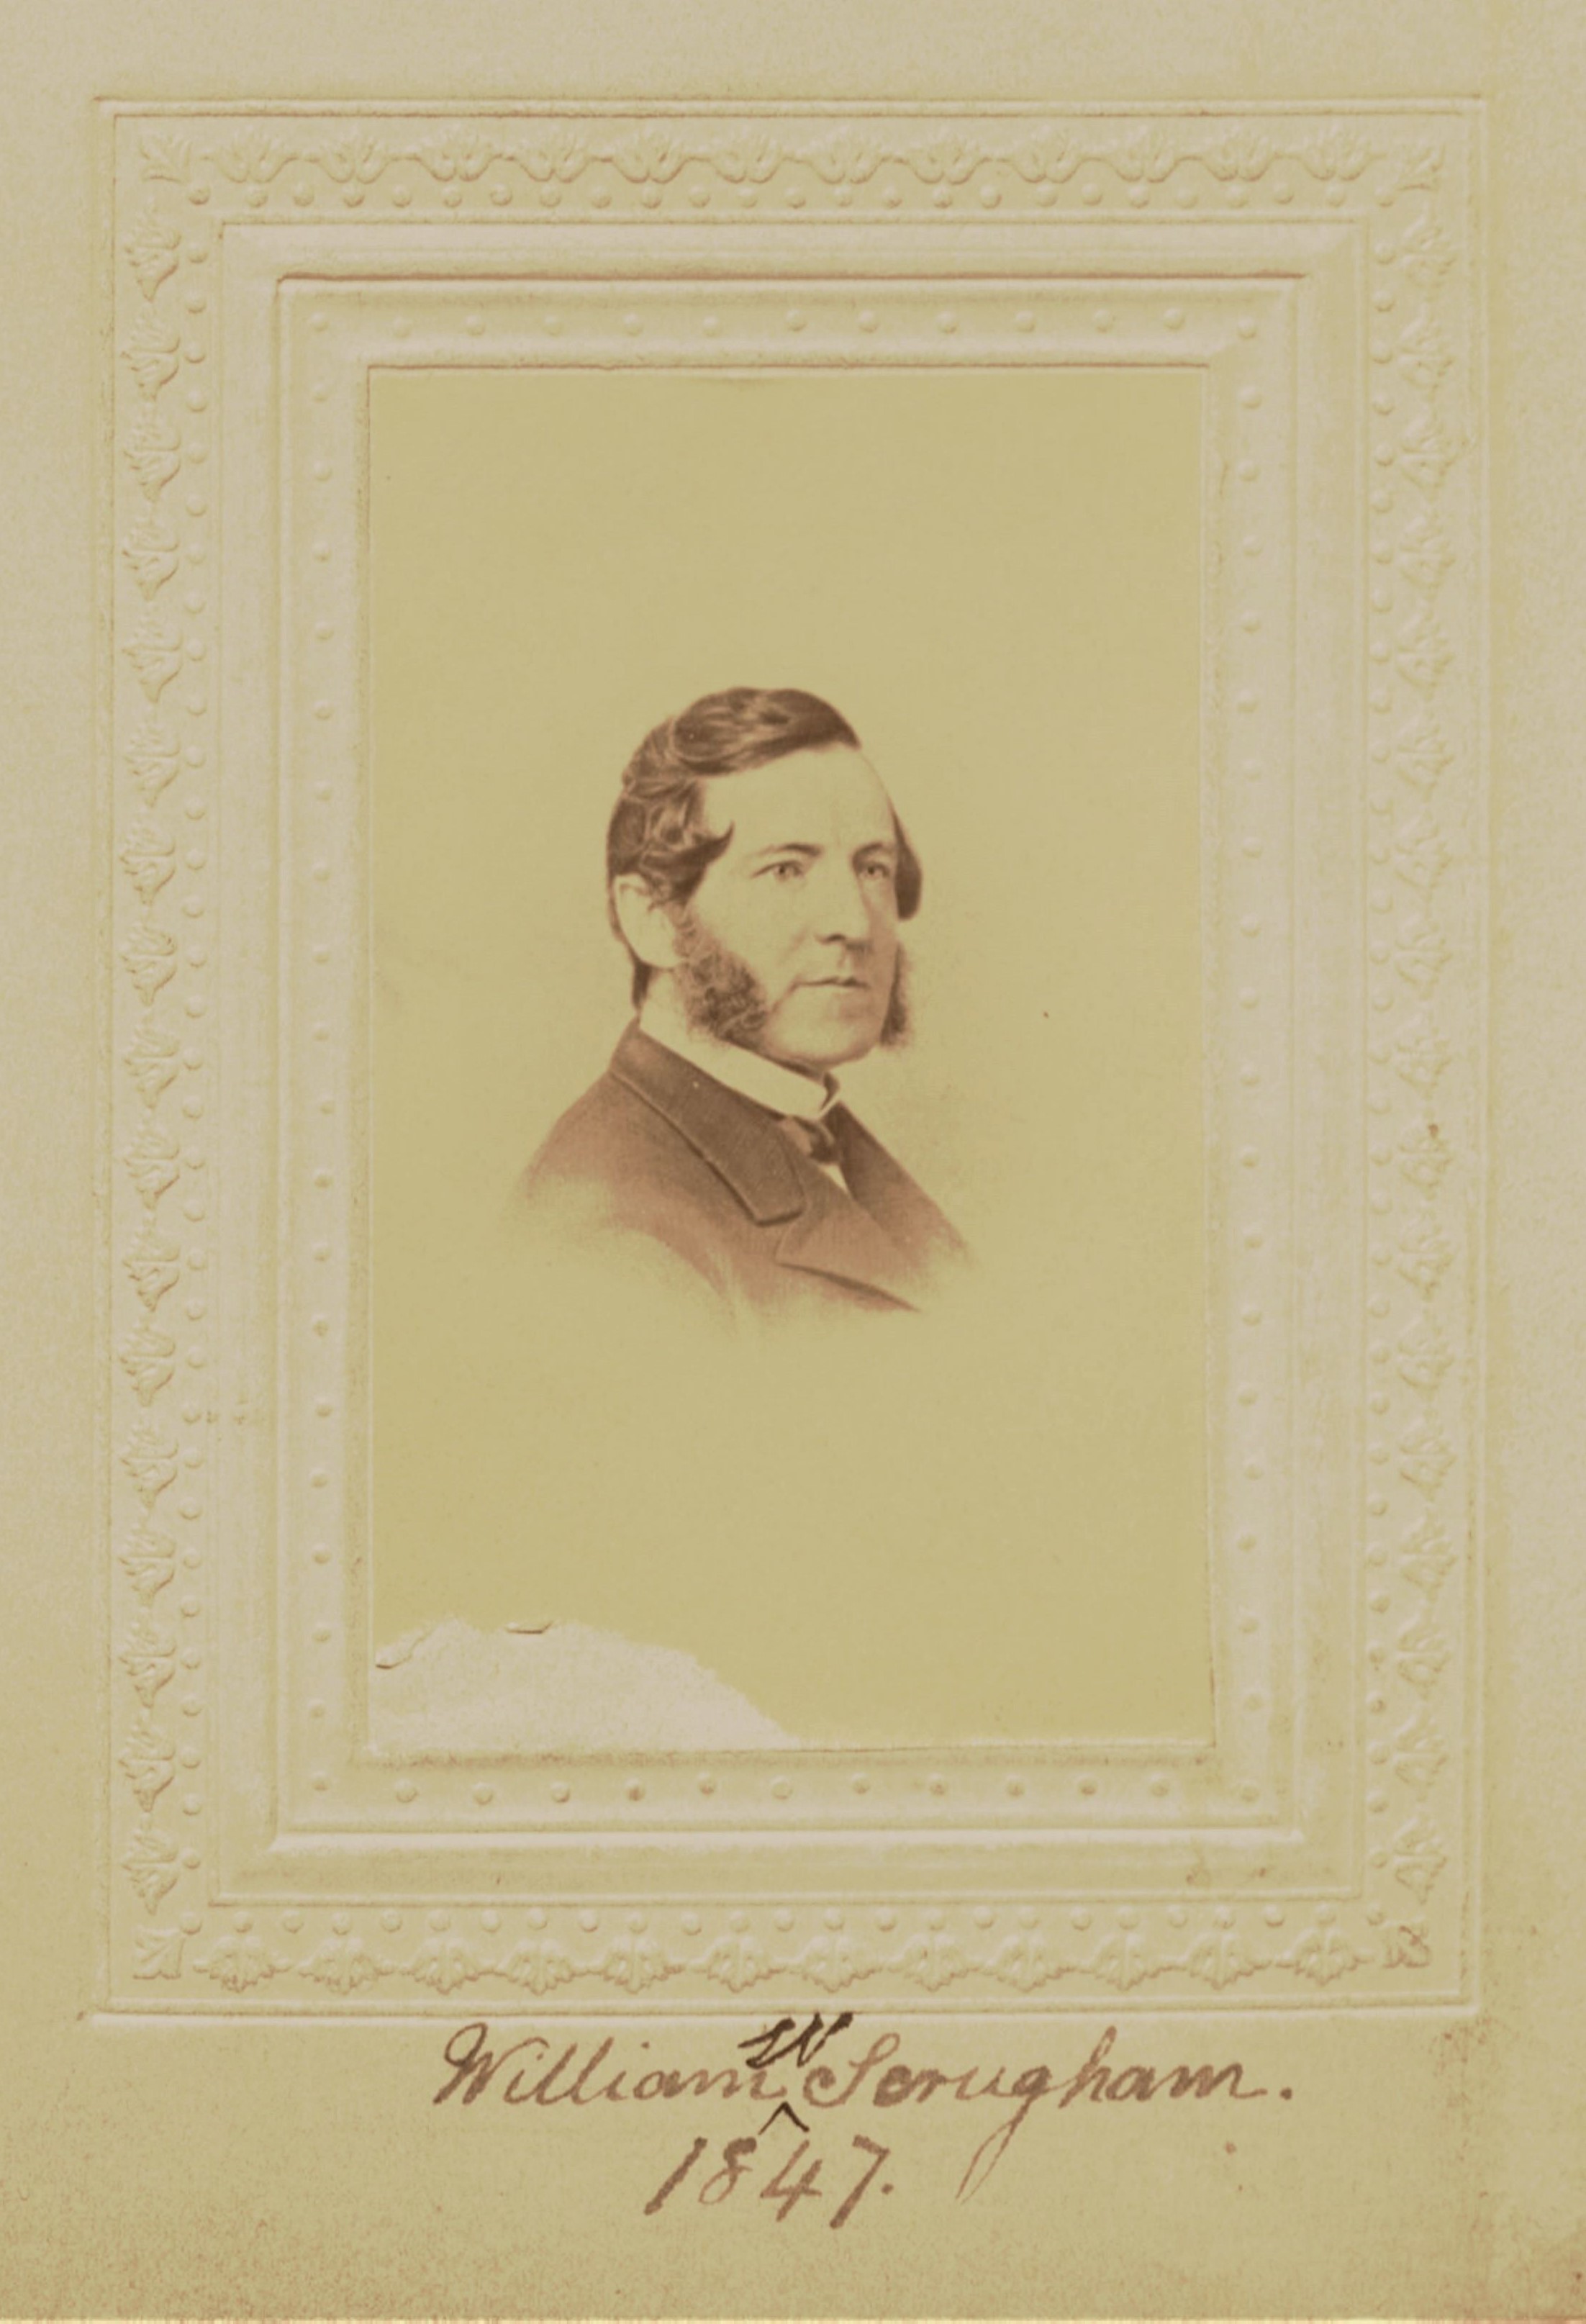 Member portrait of William W. Scrugham